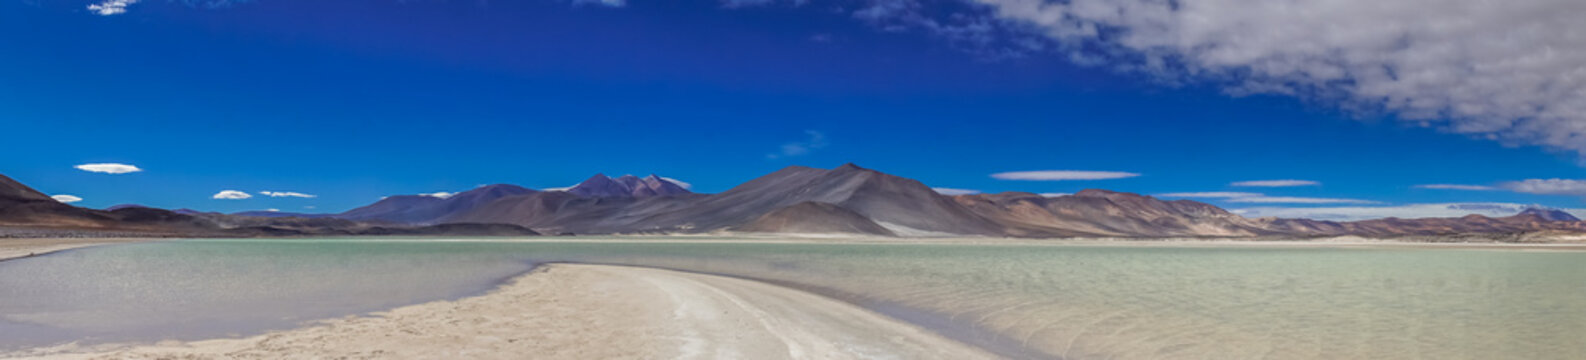 Panoramic View of lagoon Salar de talar by San Pedro de Atacama in Chile